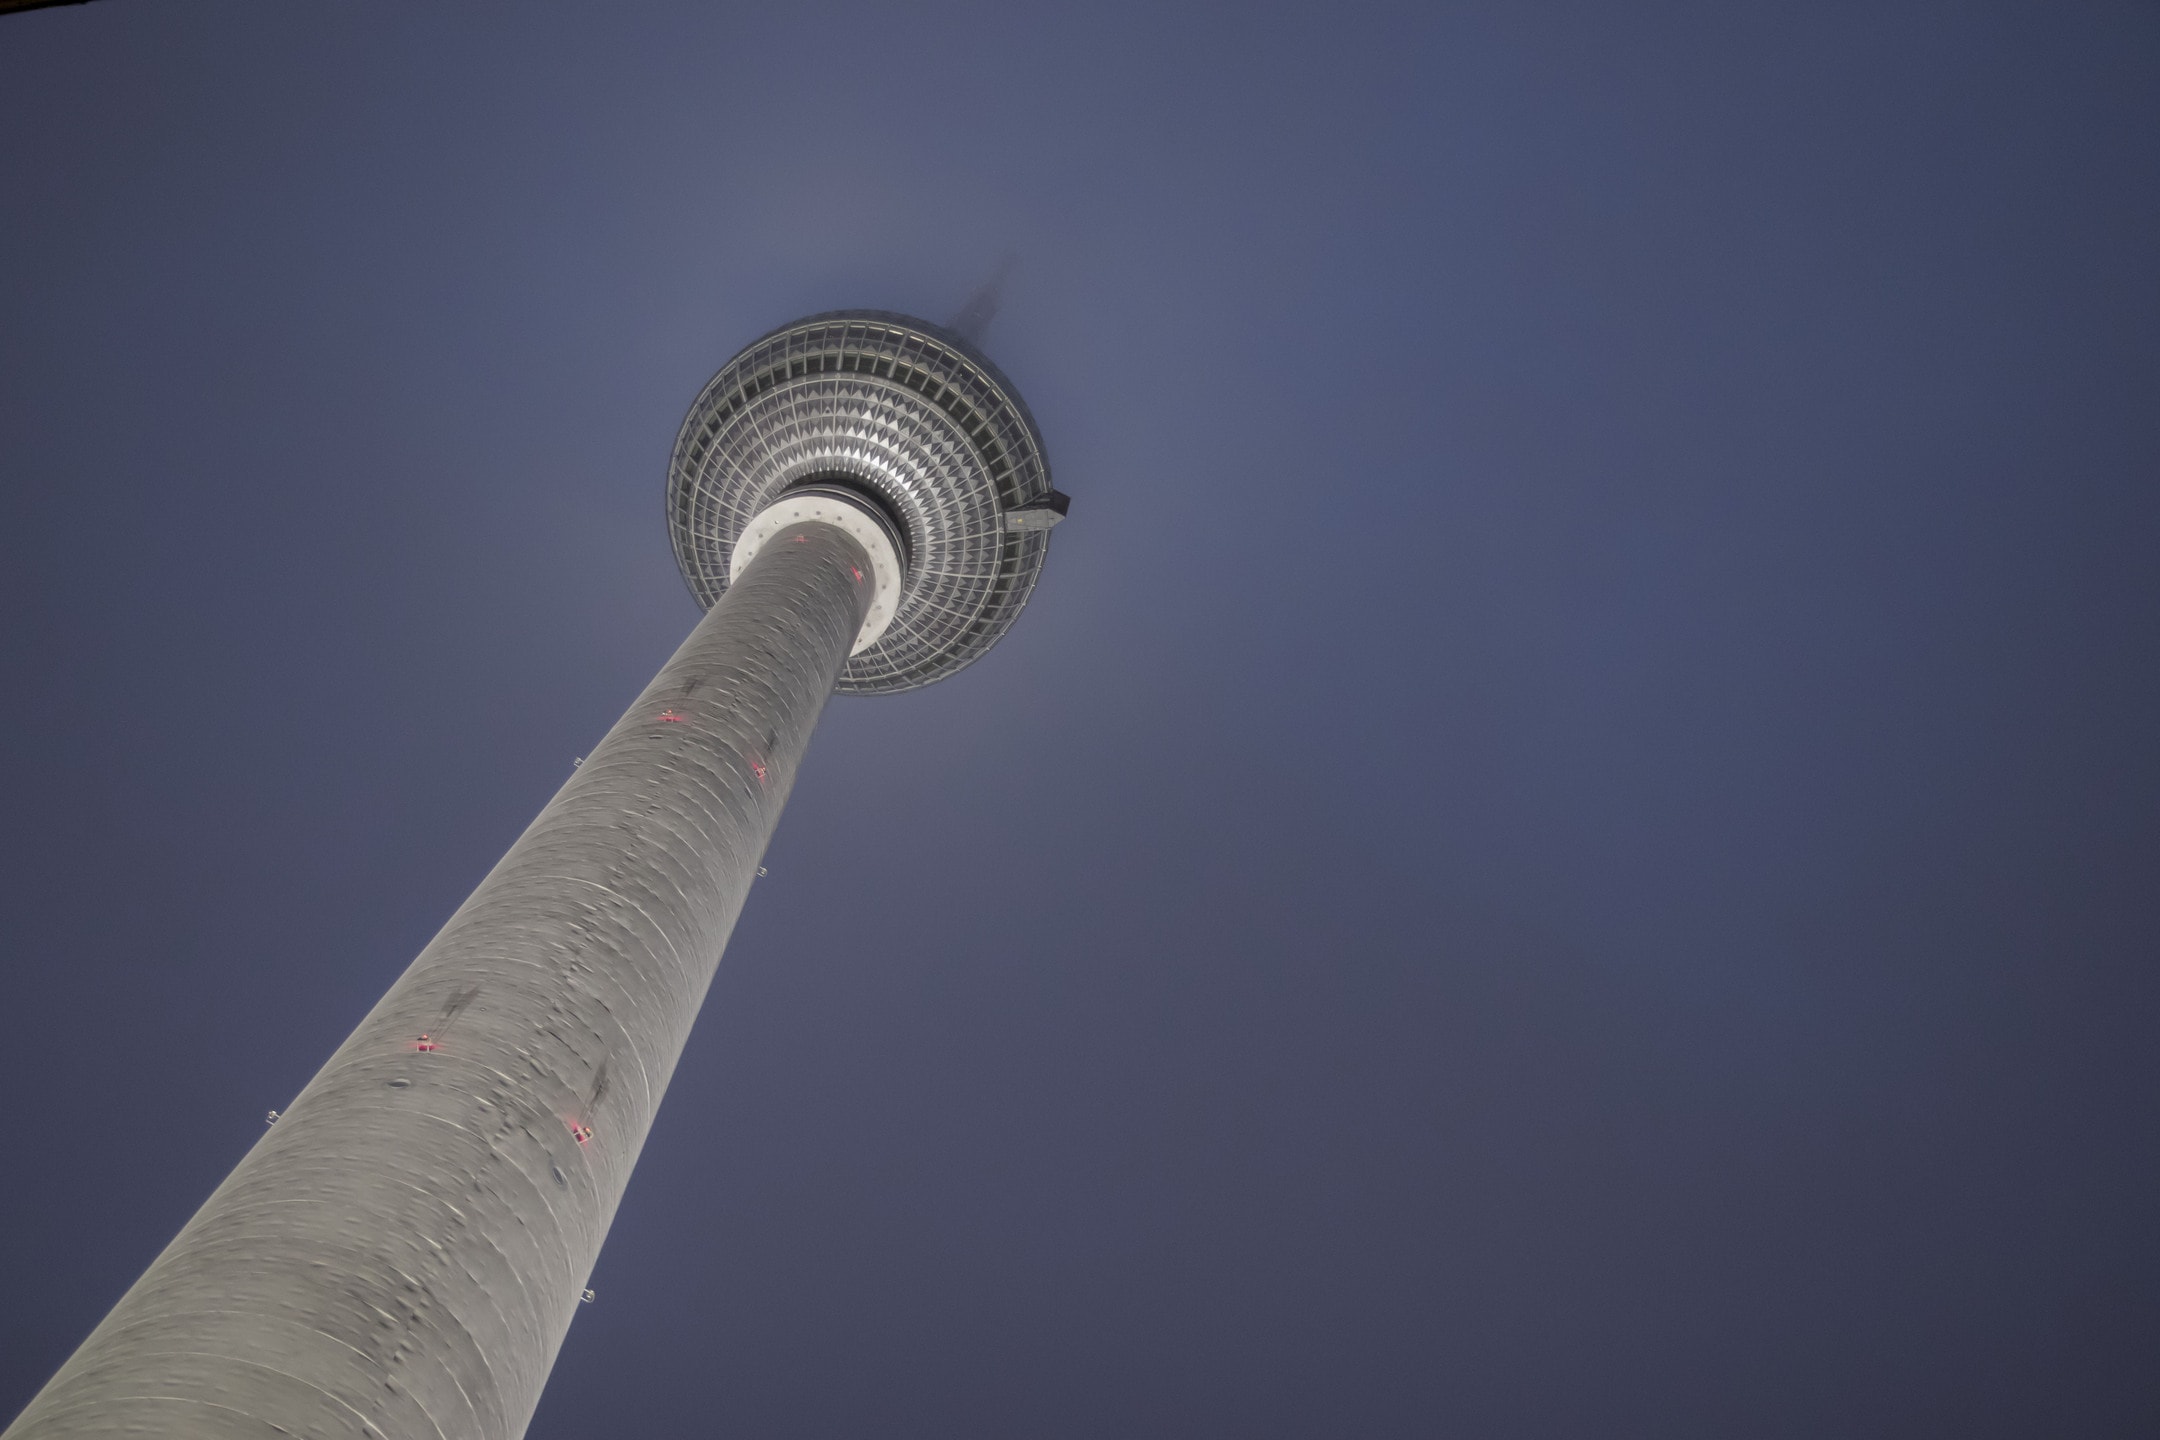 Fernsehturm Berlin in fog